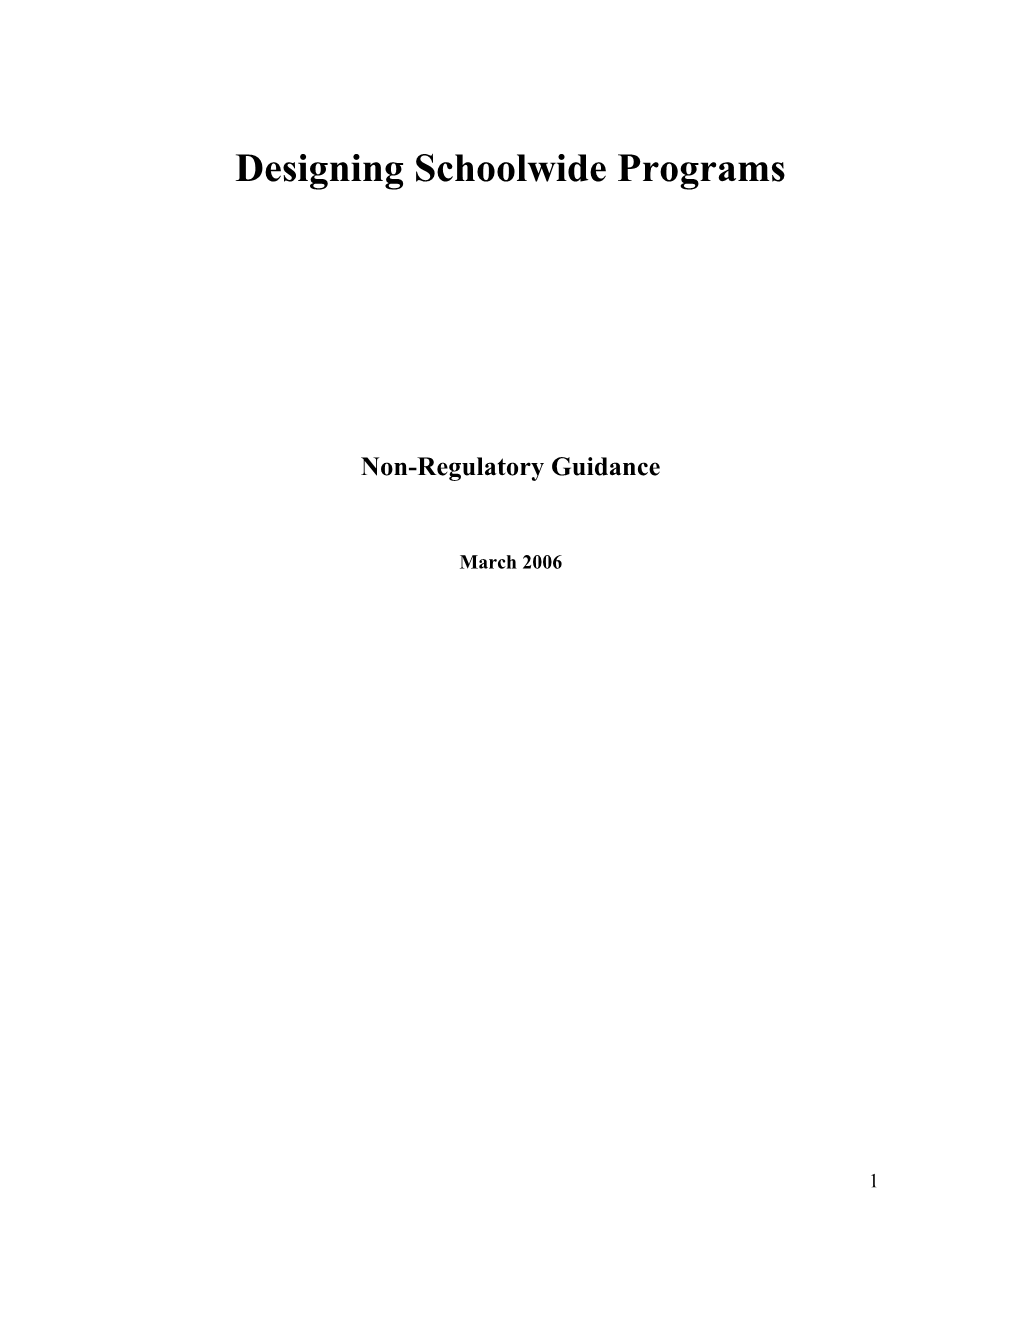 Designing Schoolwide Programs Non-Regulatory Guidance (MS Word) s1